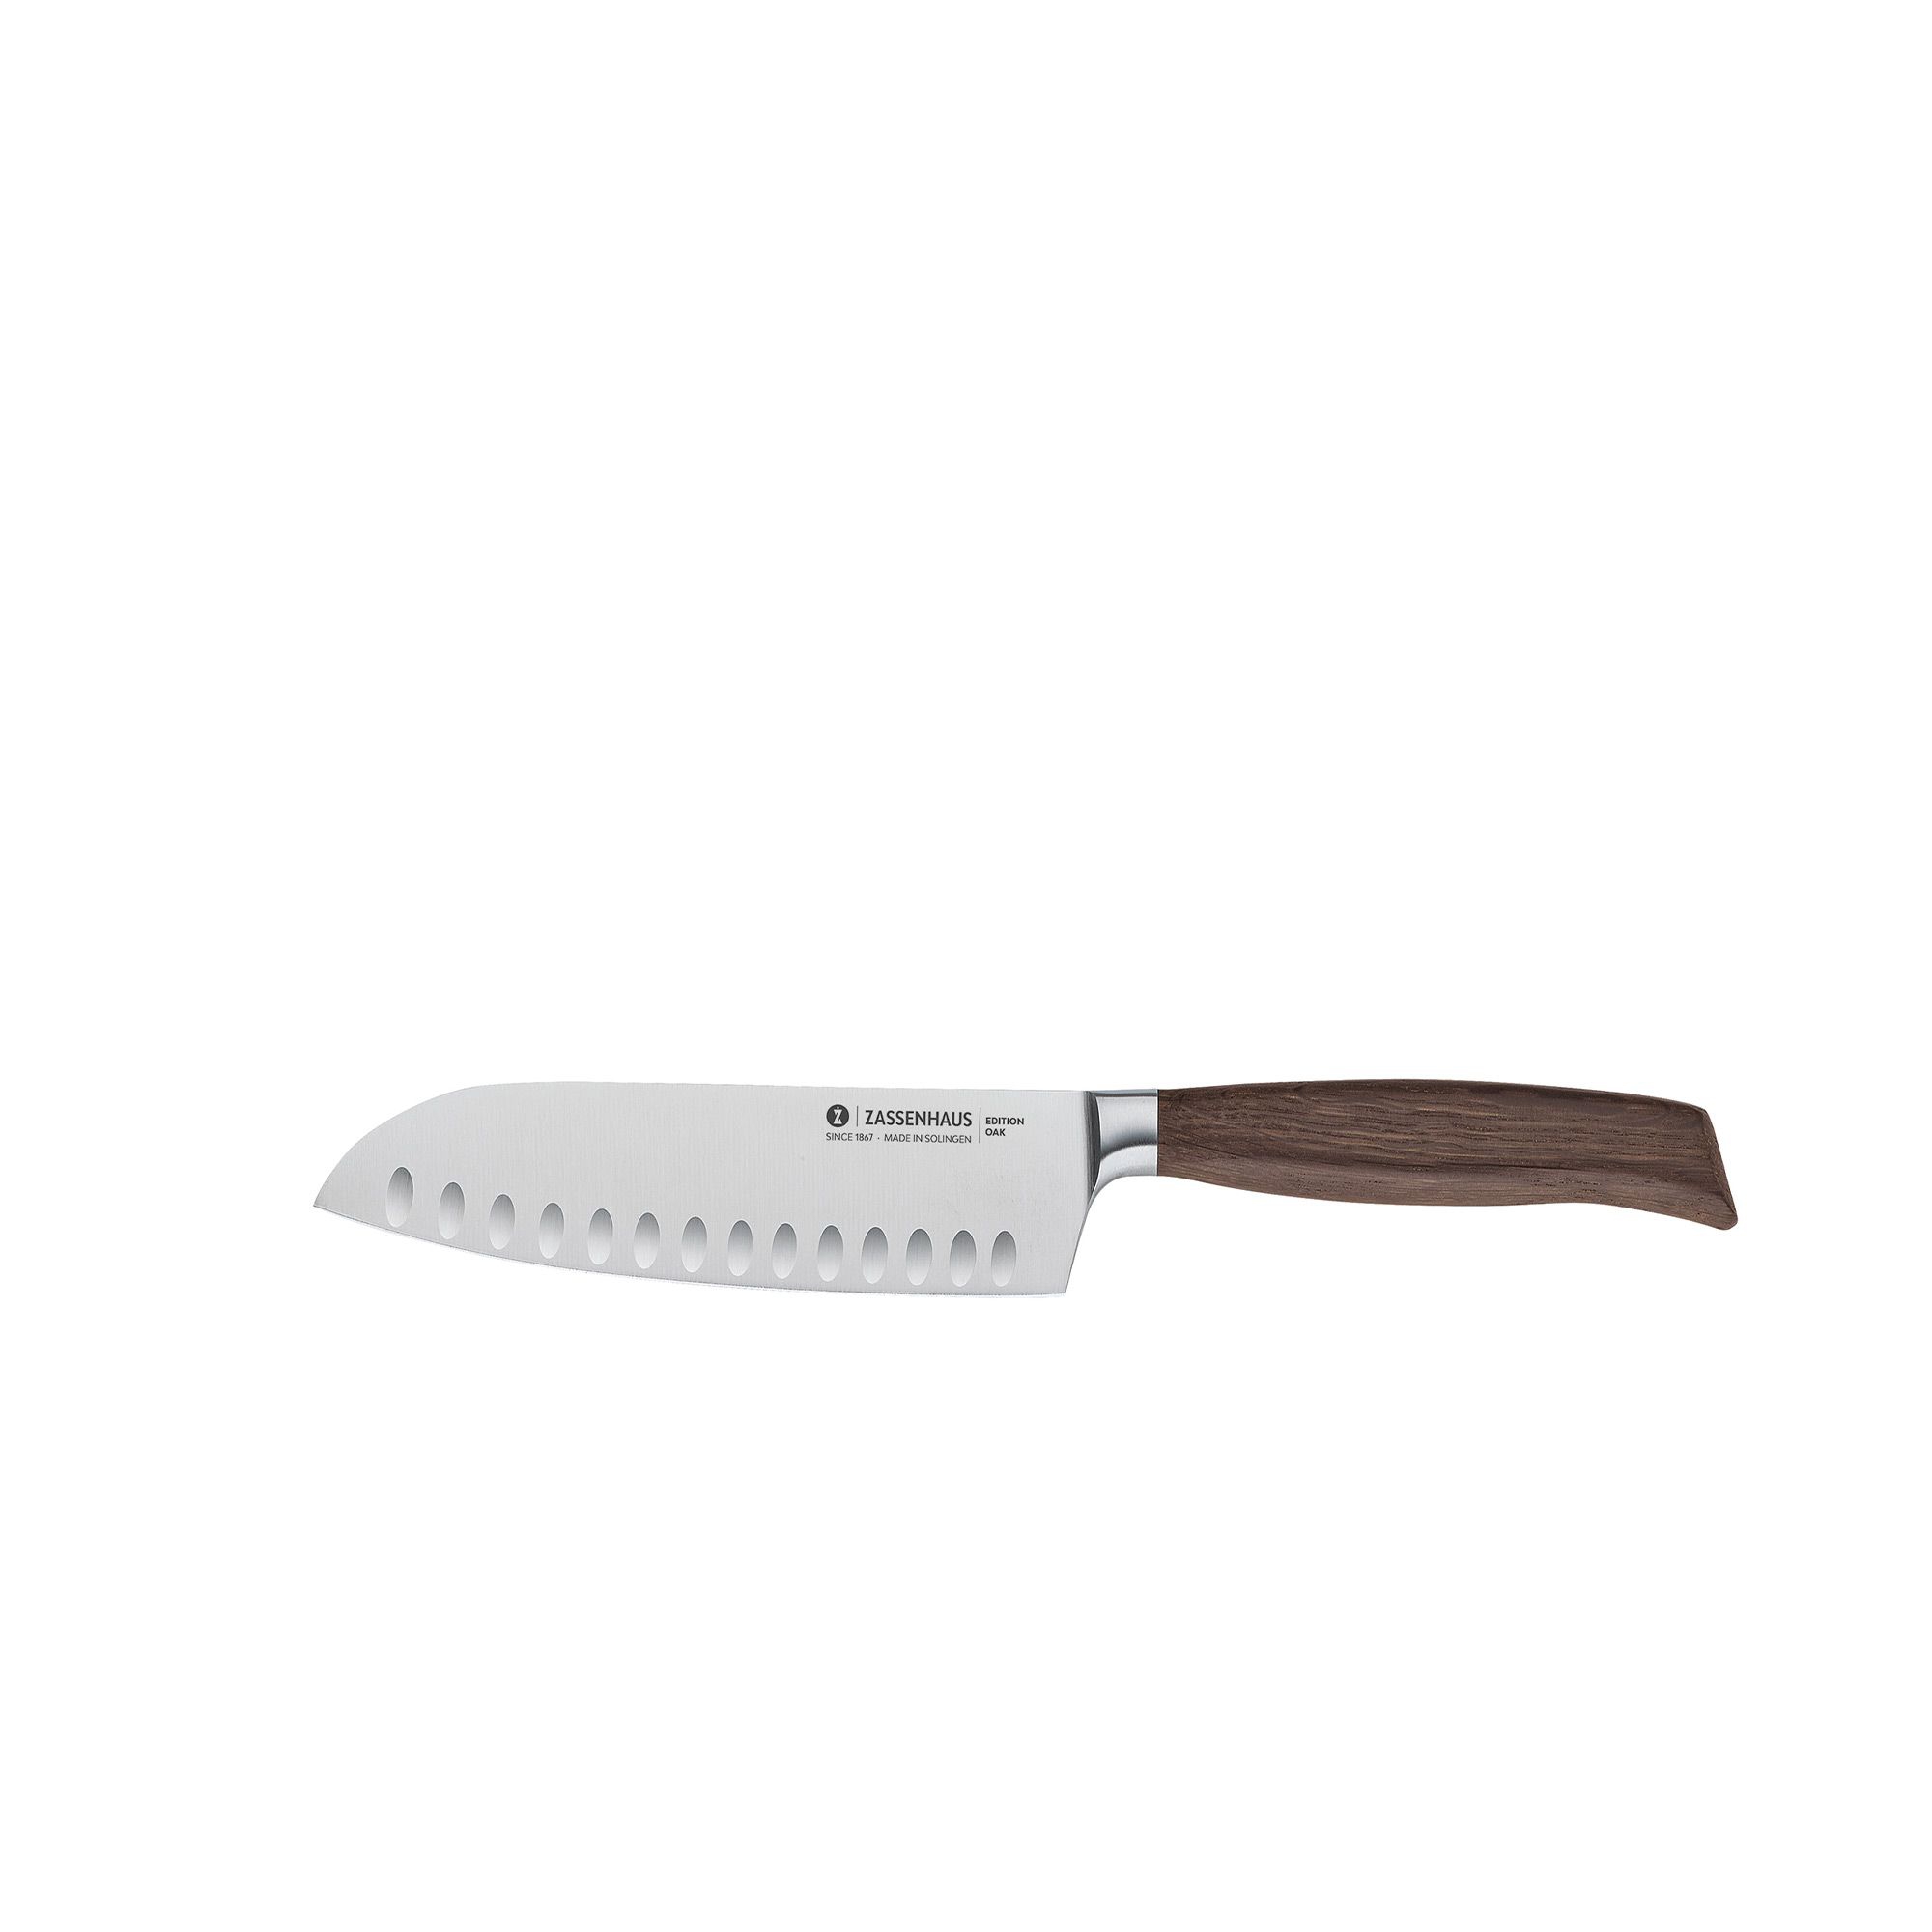 Zassenhaus - Santoku knife 16 cm - EDITION OAK